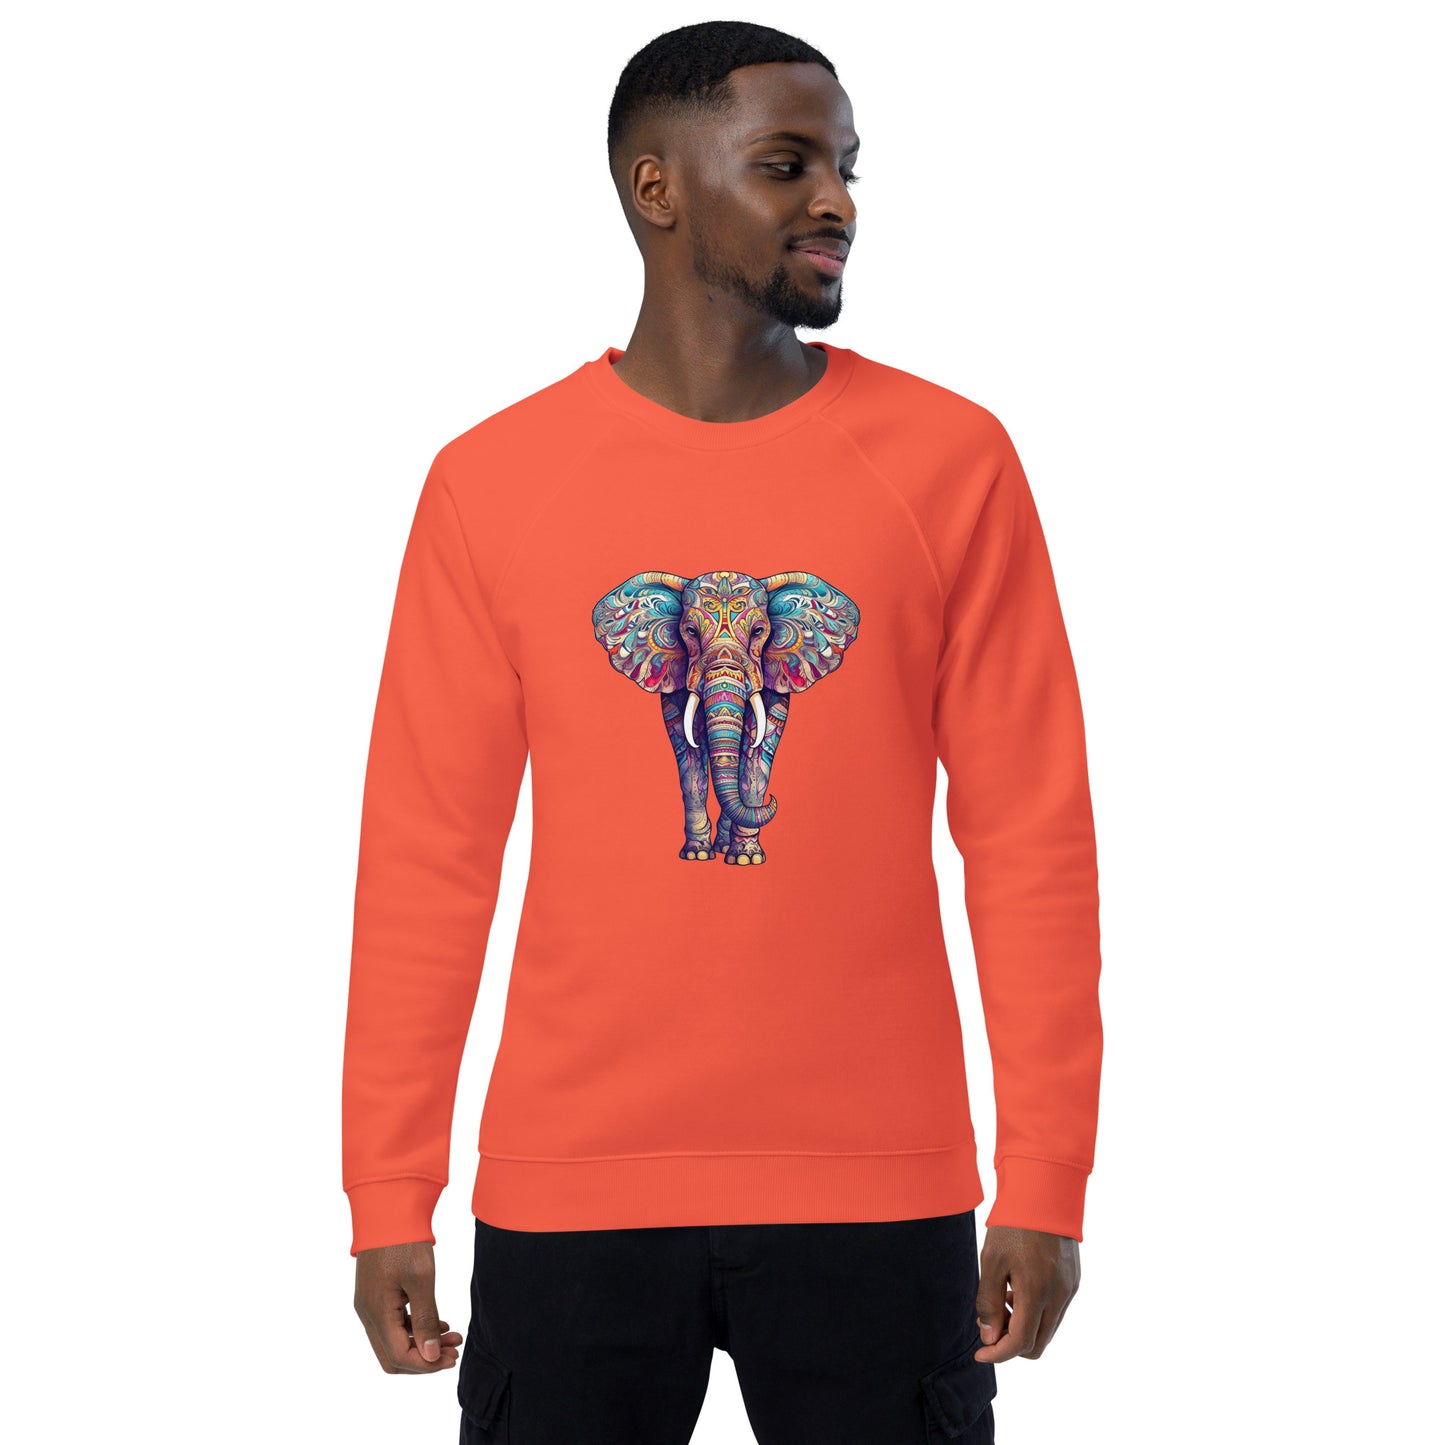 Unisex Bio-Sweatshirt/Bunt-Elefant